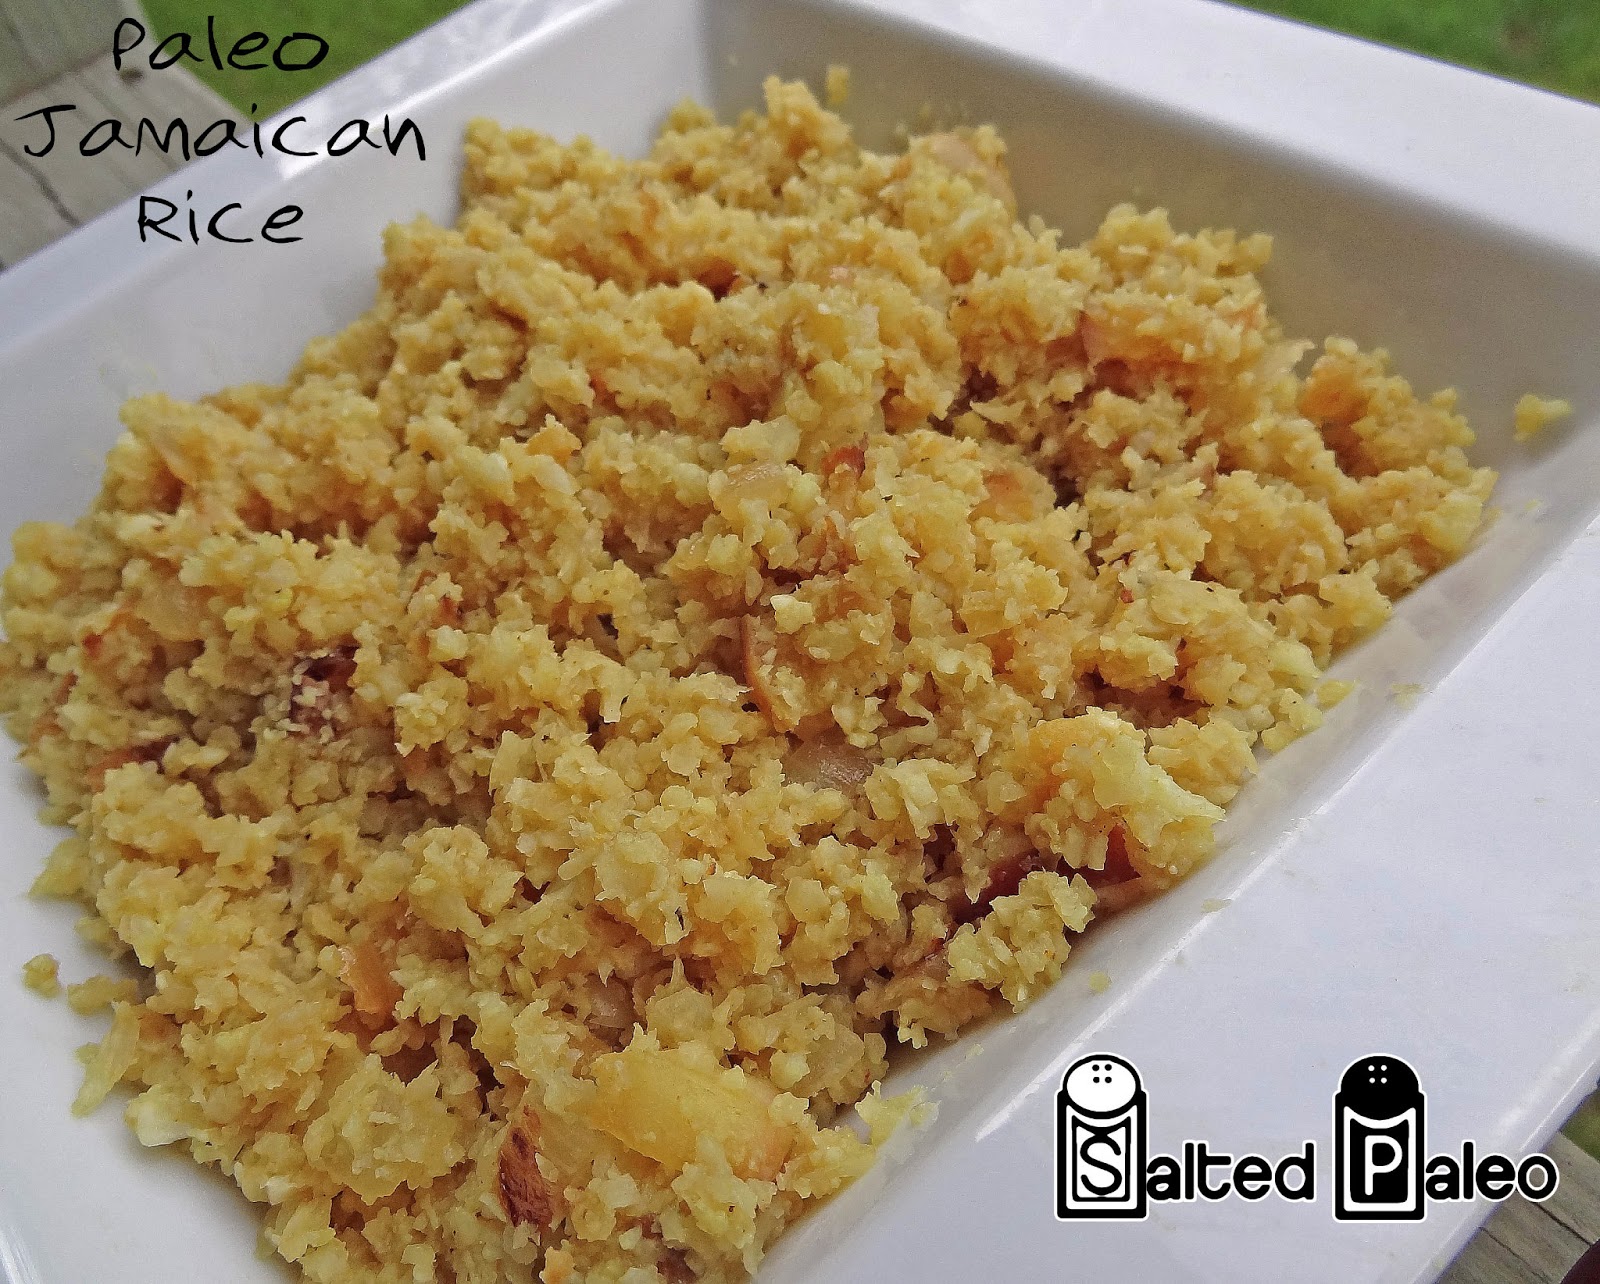 Salted Paleo: Jamaican Rice (paleo, scd)